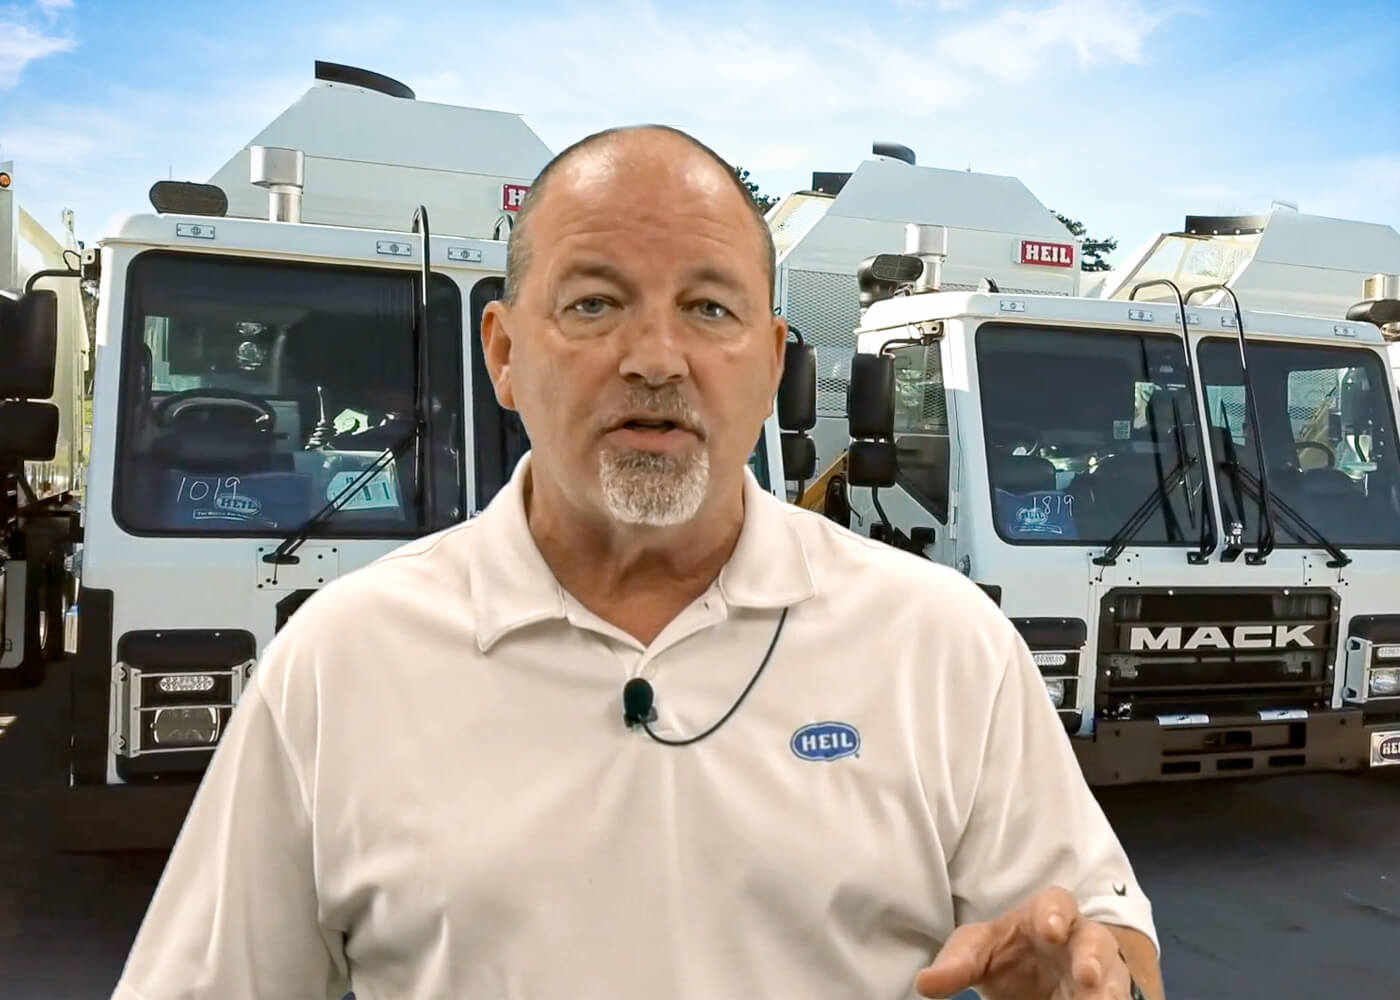 Buy Heil garbage trucks for sale through Ready Truck